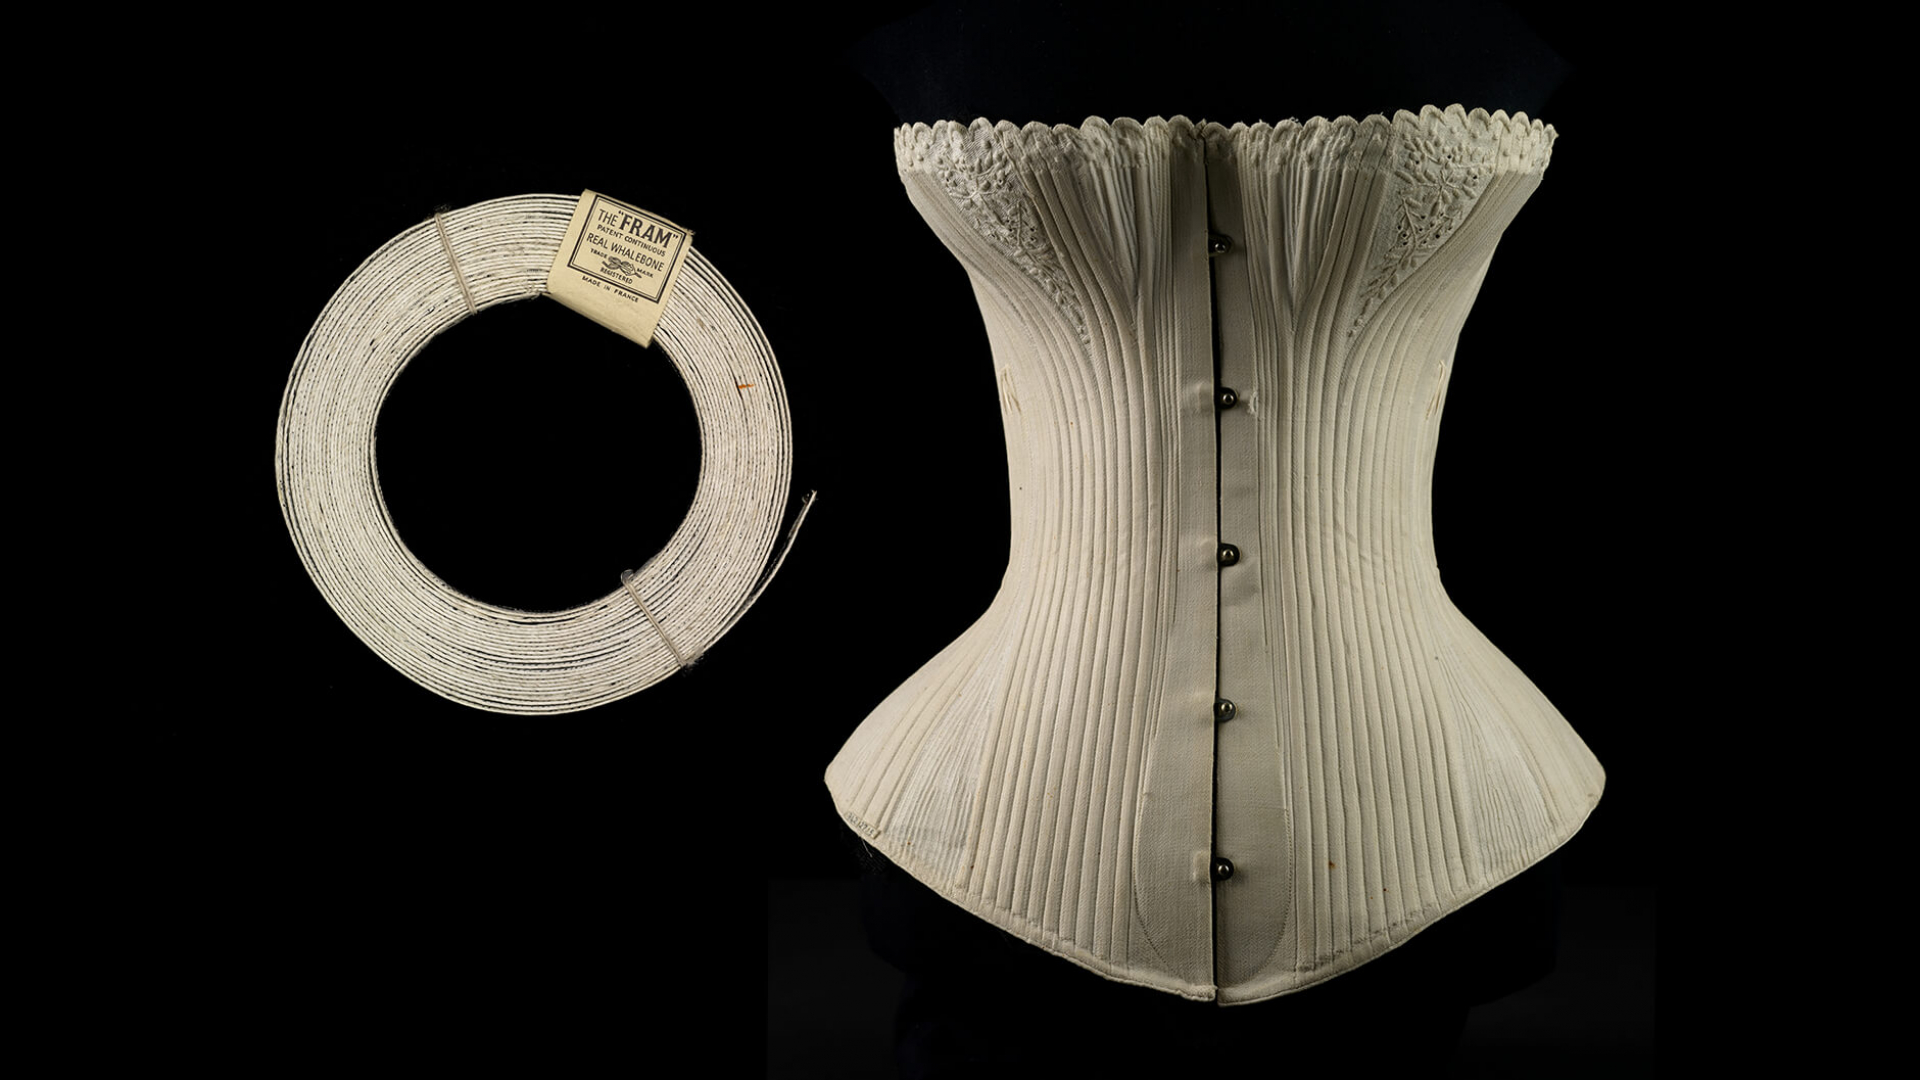 Women In A Whale-Boned Corset History (18 x 24) 